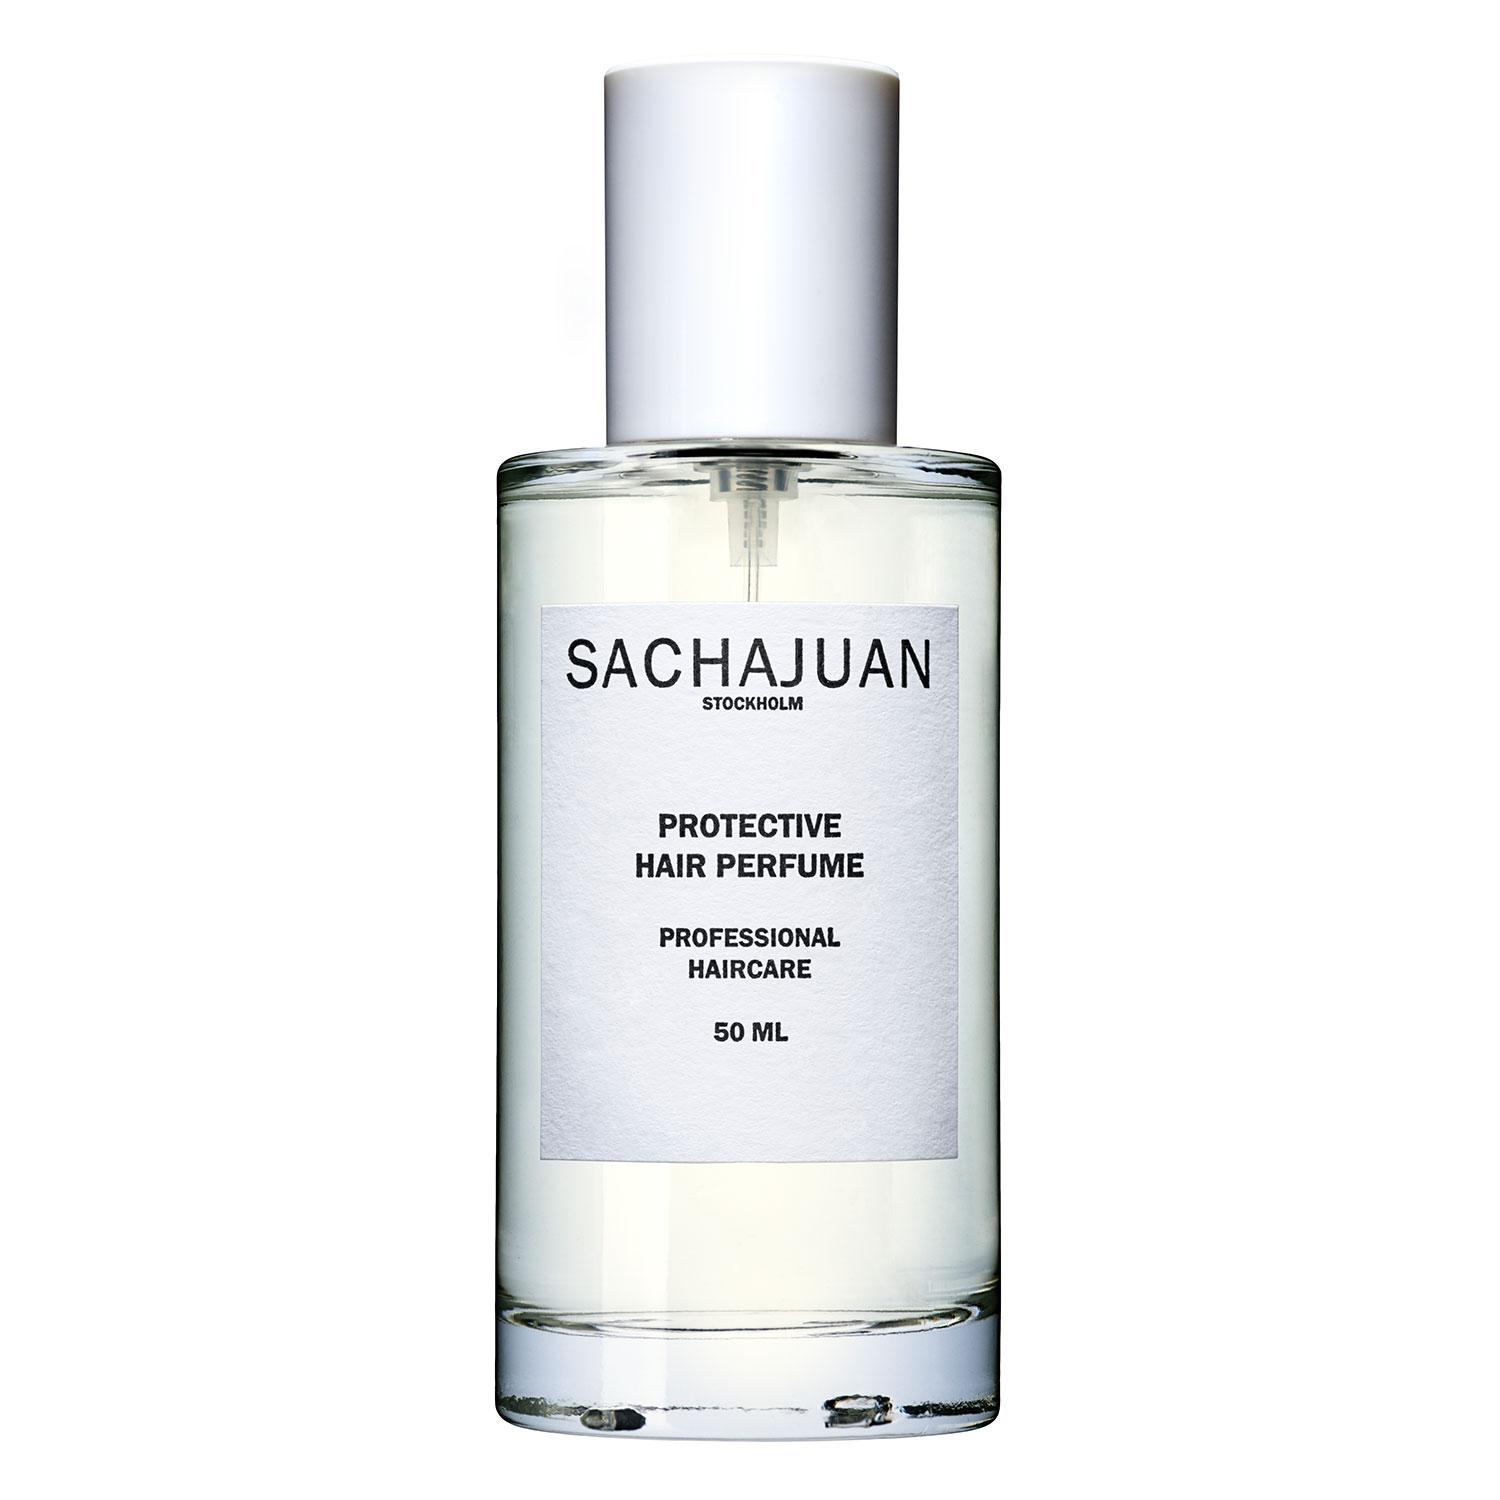 SACHAJUAN - Protective Hair Perfume